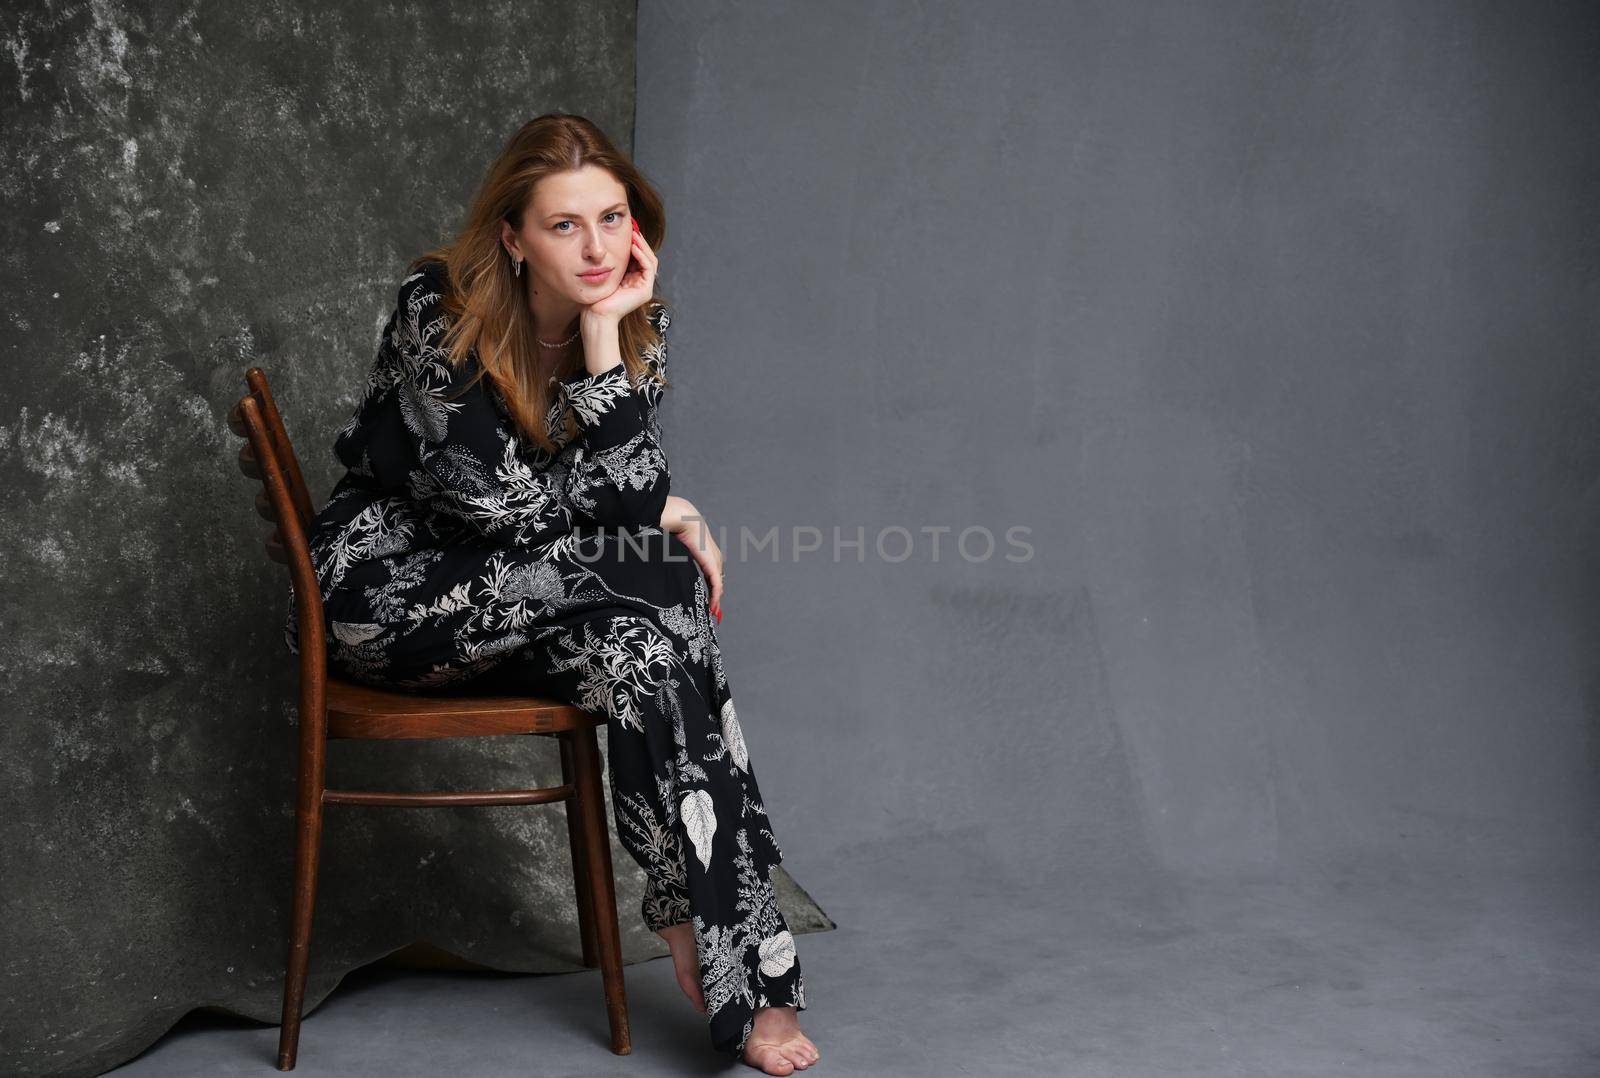 High resolution portrait of european model sitting on chair against dark background in studio